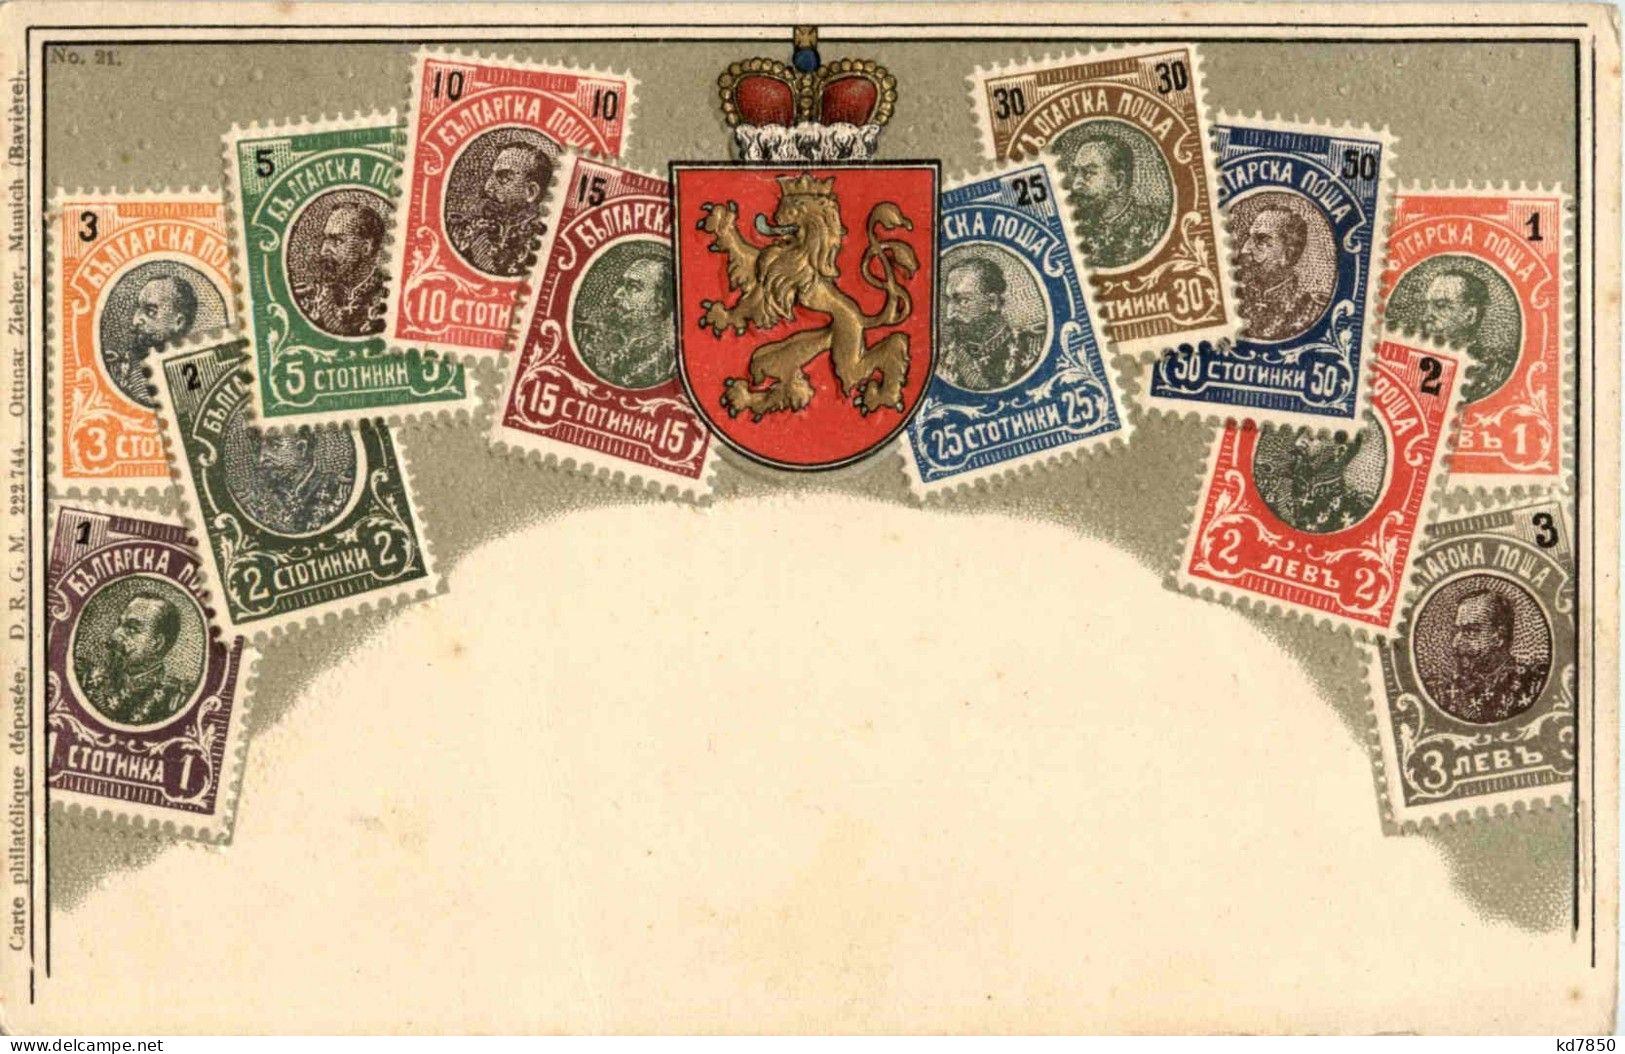 Bulgaria - Briefmarken - Stamps - Prägekarte - Stamps (pictures)